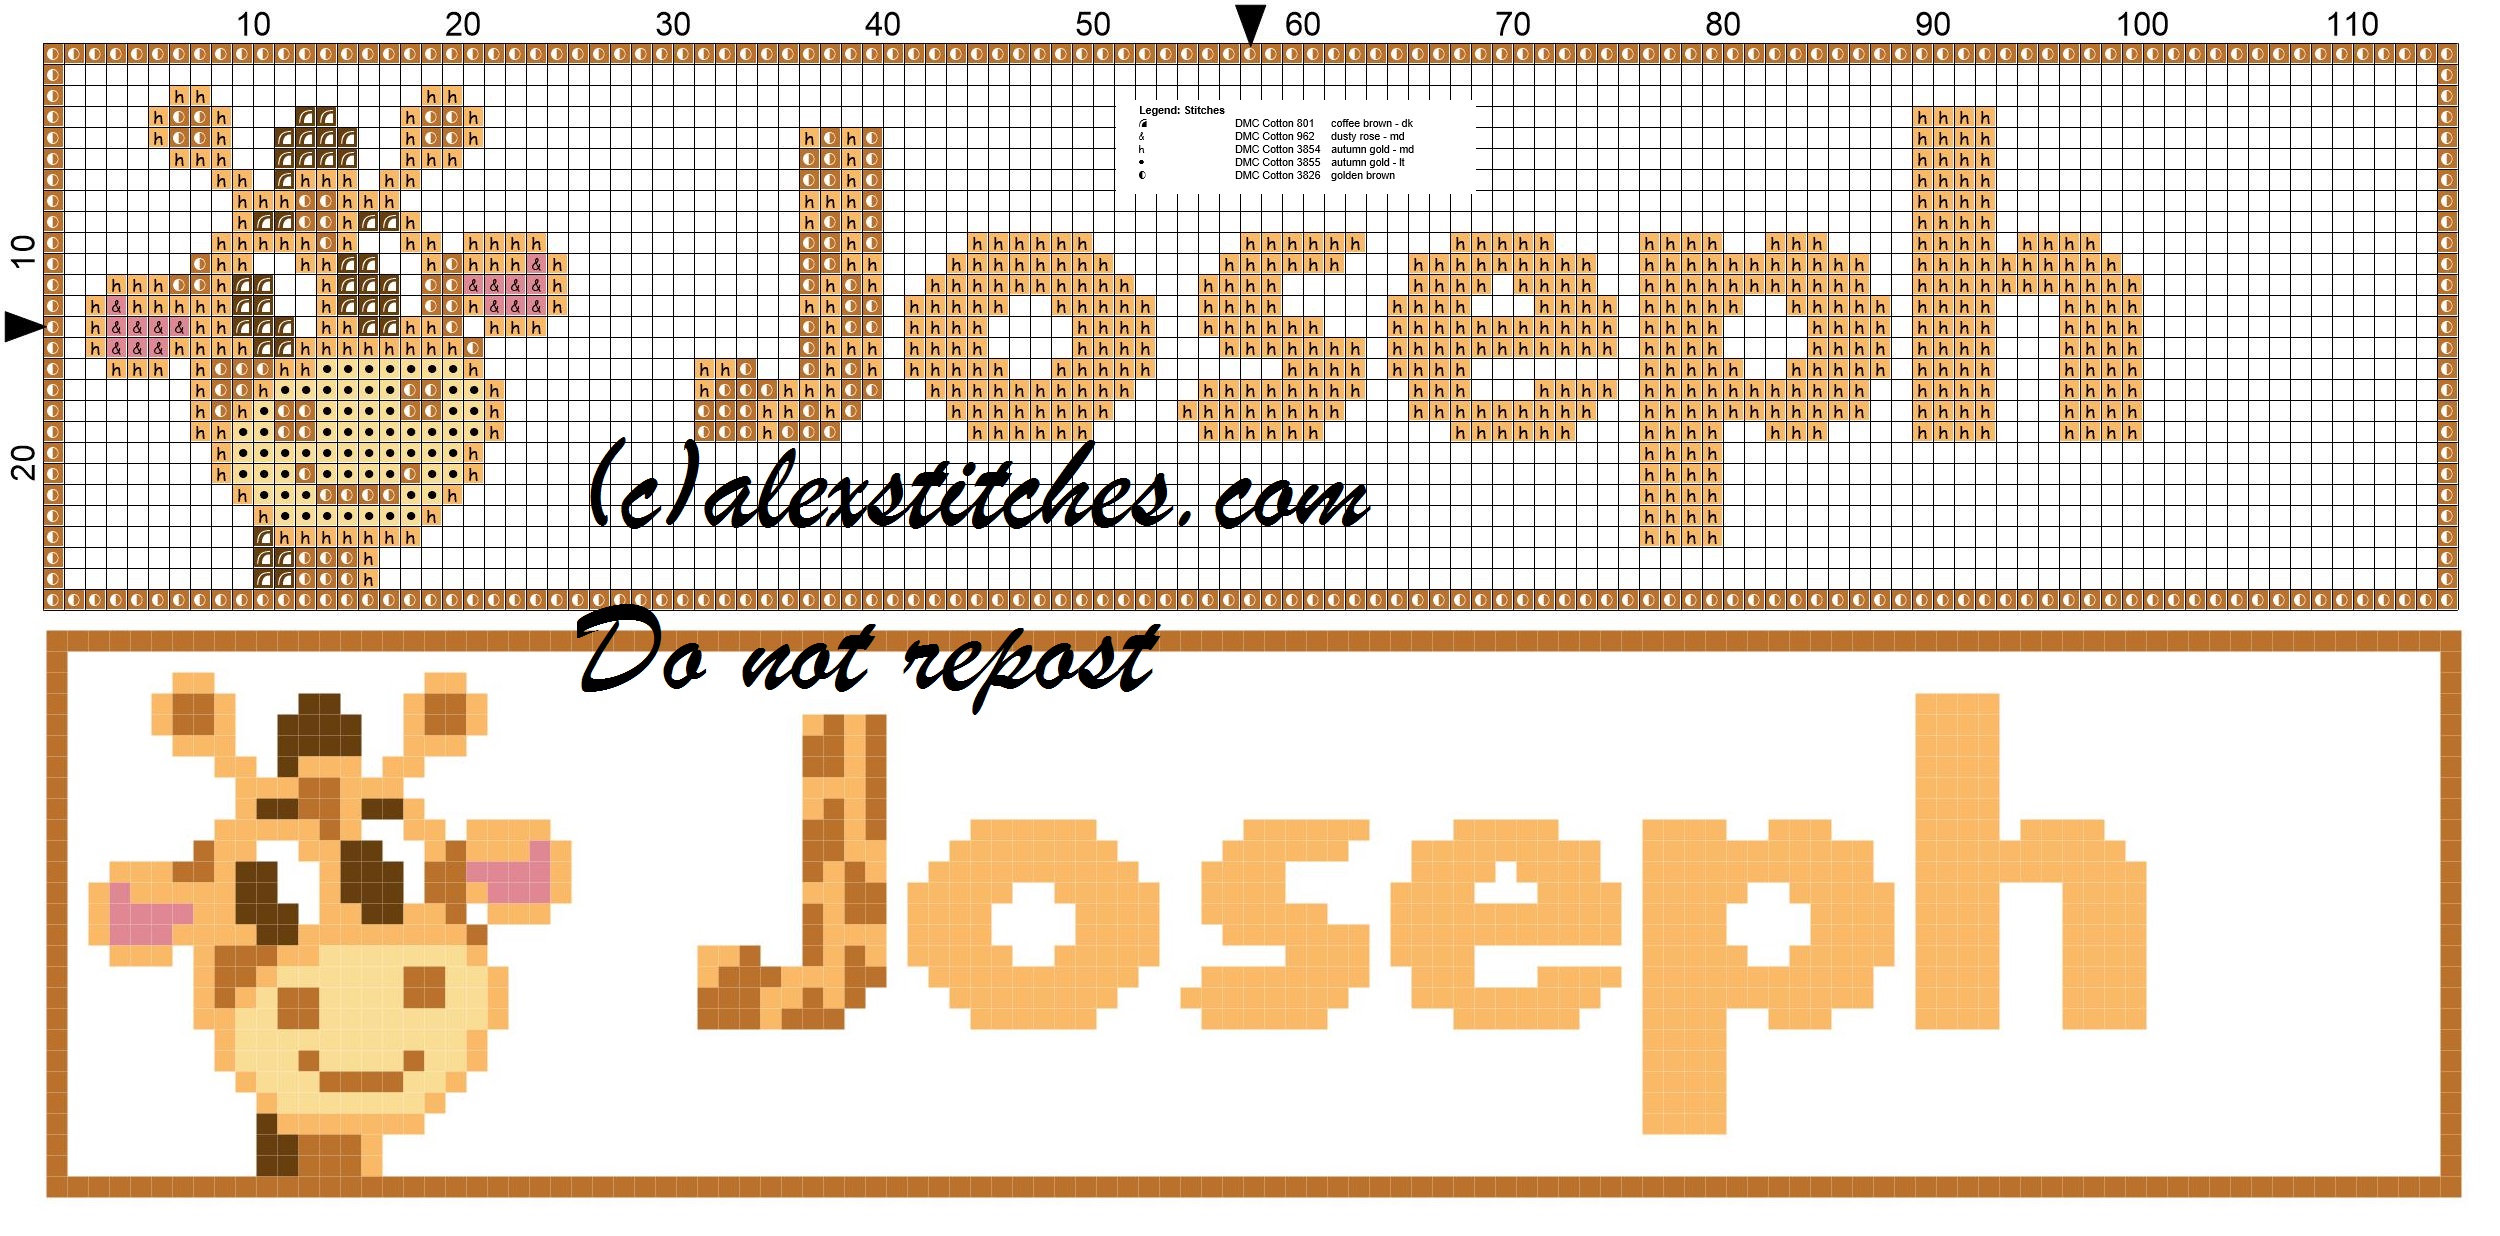 Joseph name with giraffe cross stitch pattern